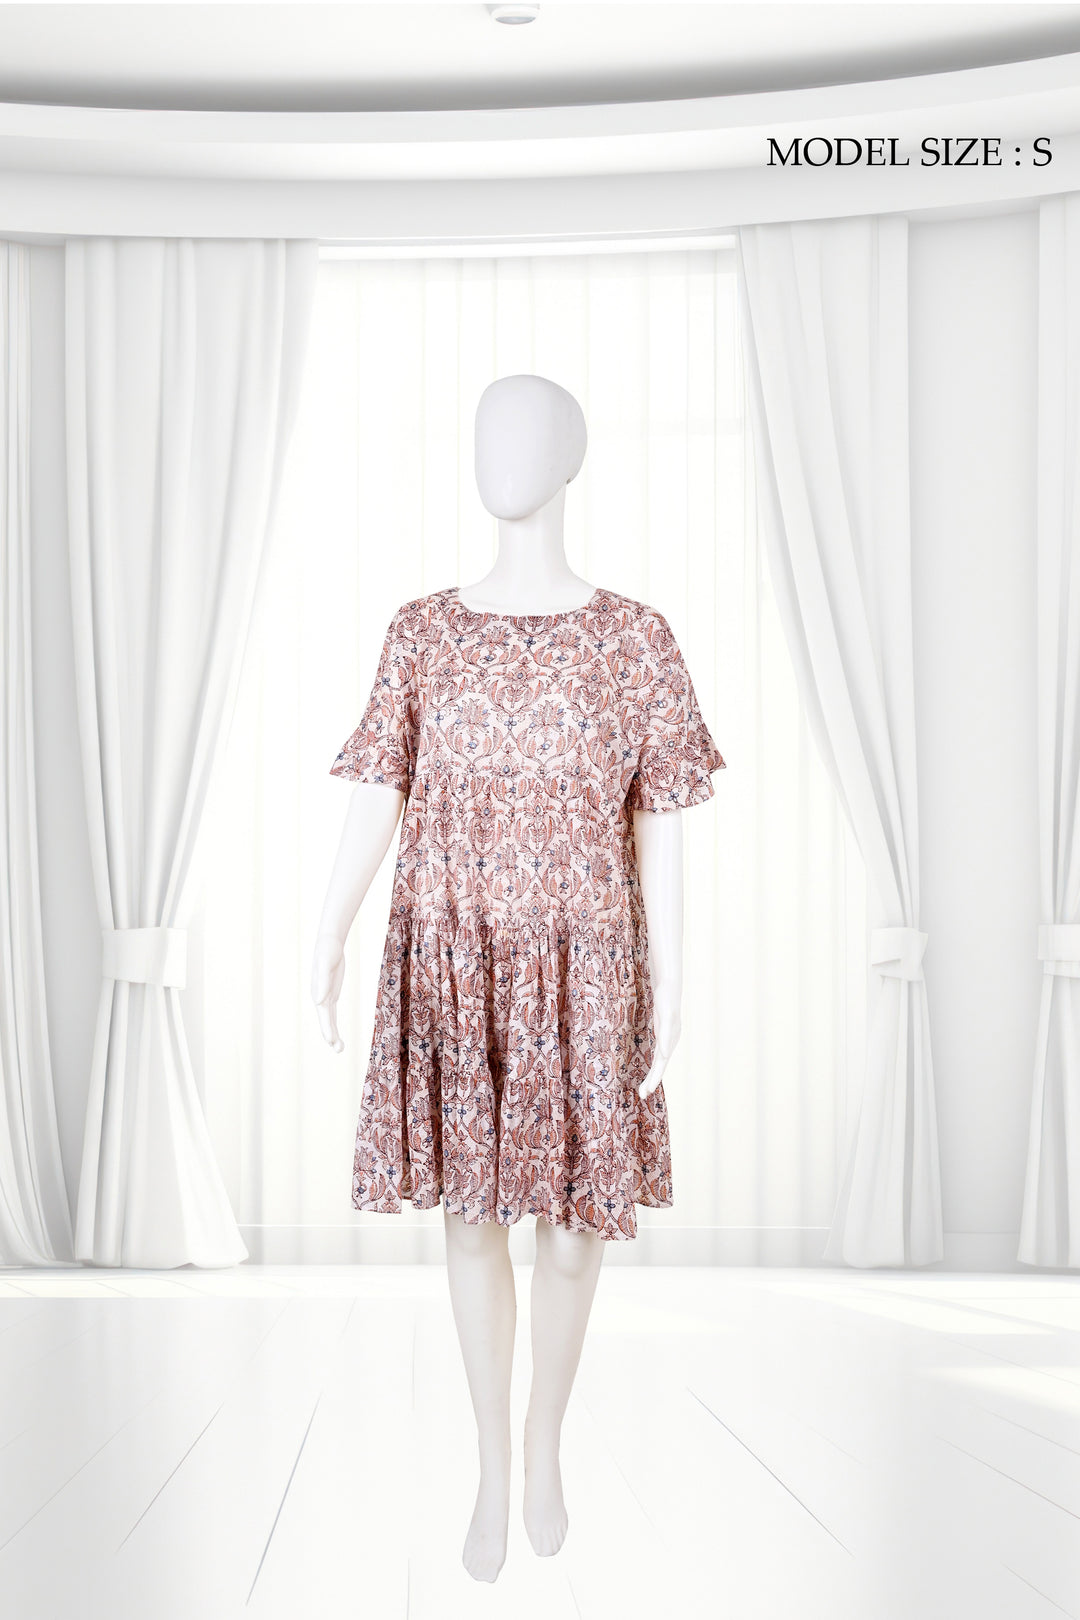 Gingham Checkered ELOISE Cotton Maxi Dress